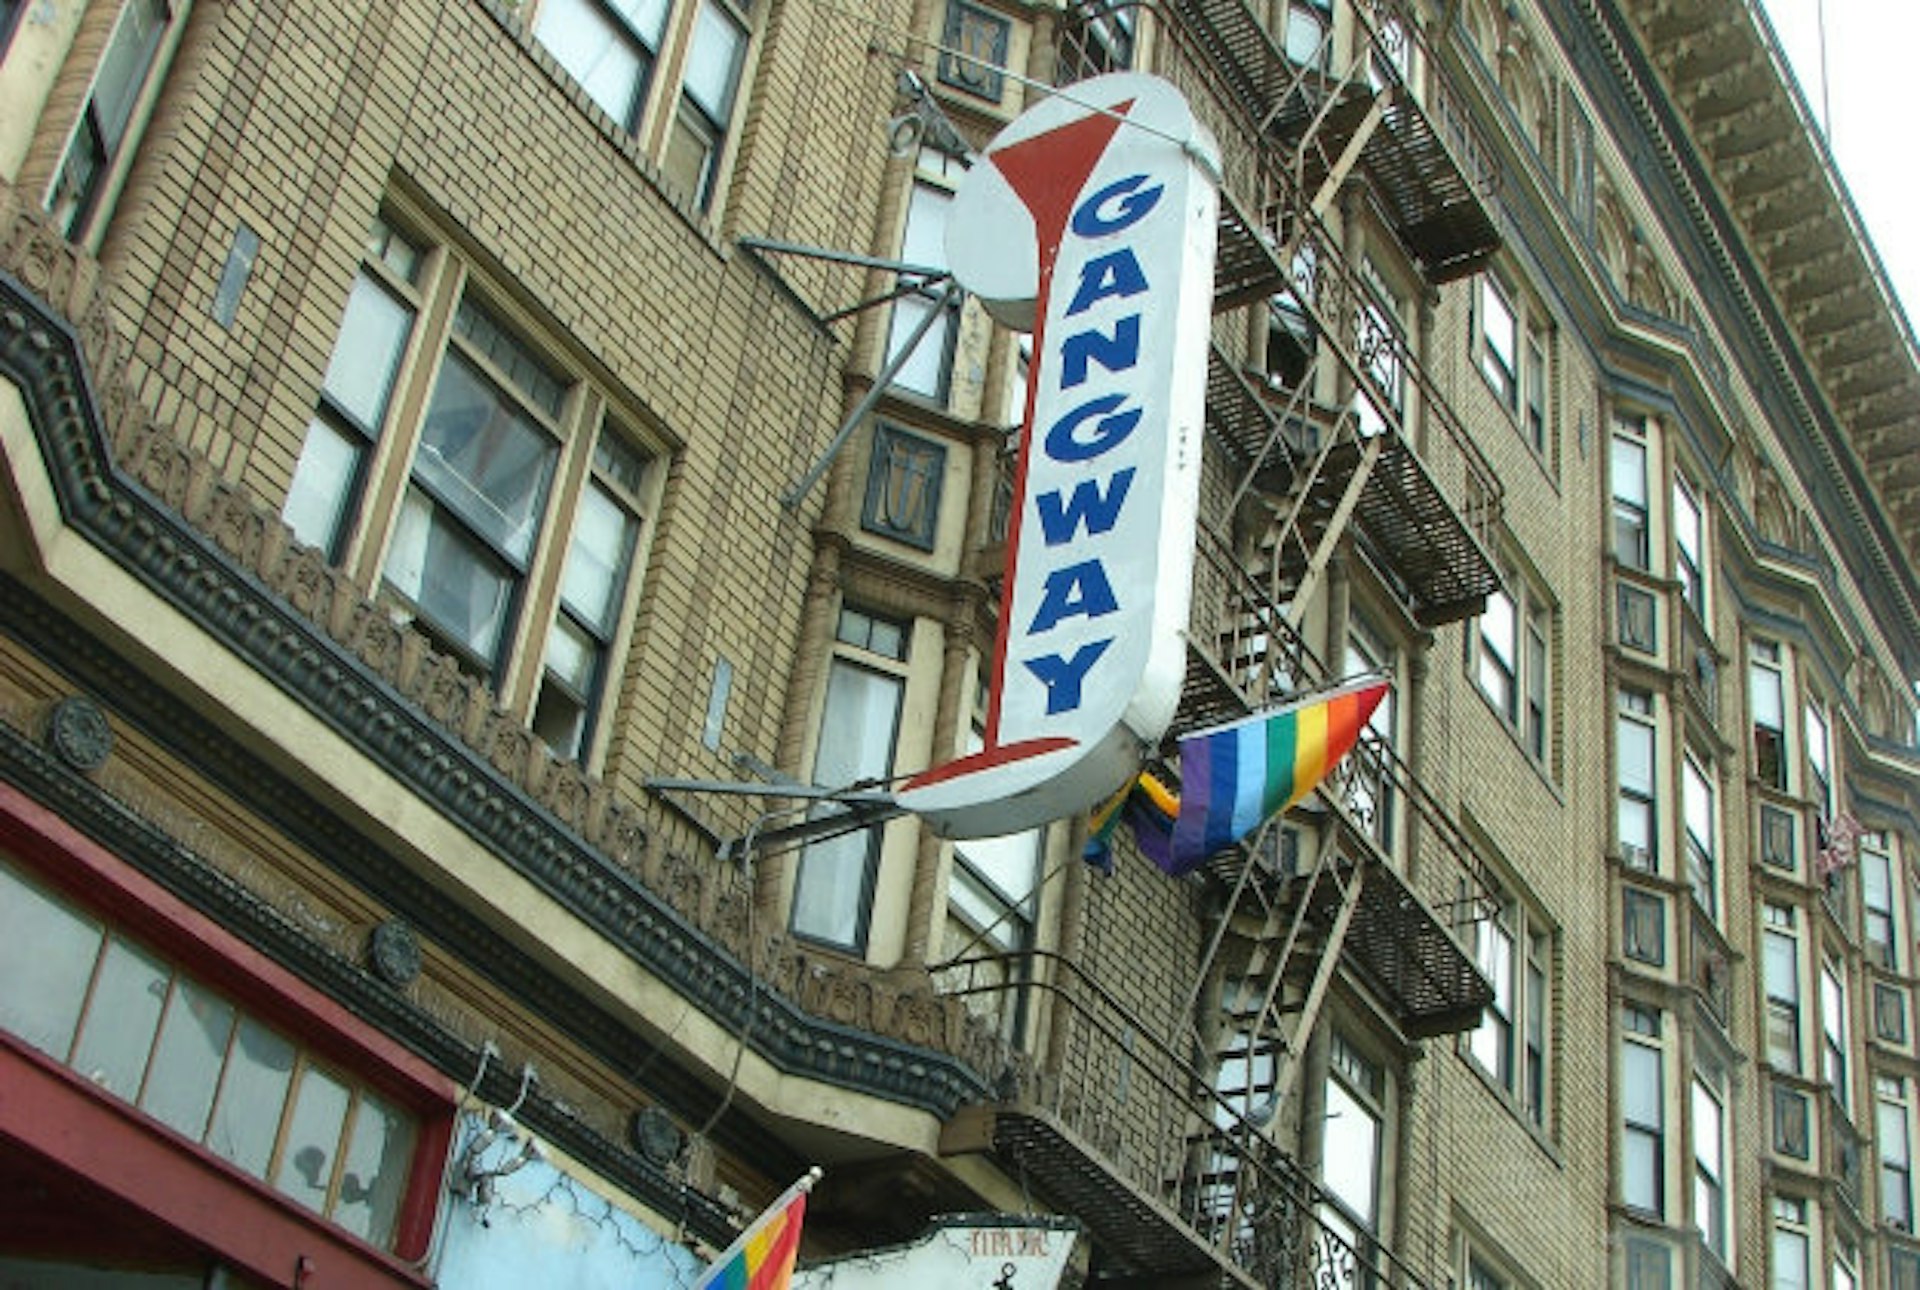 San Francisco's oldest gay bar Gangway to close.